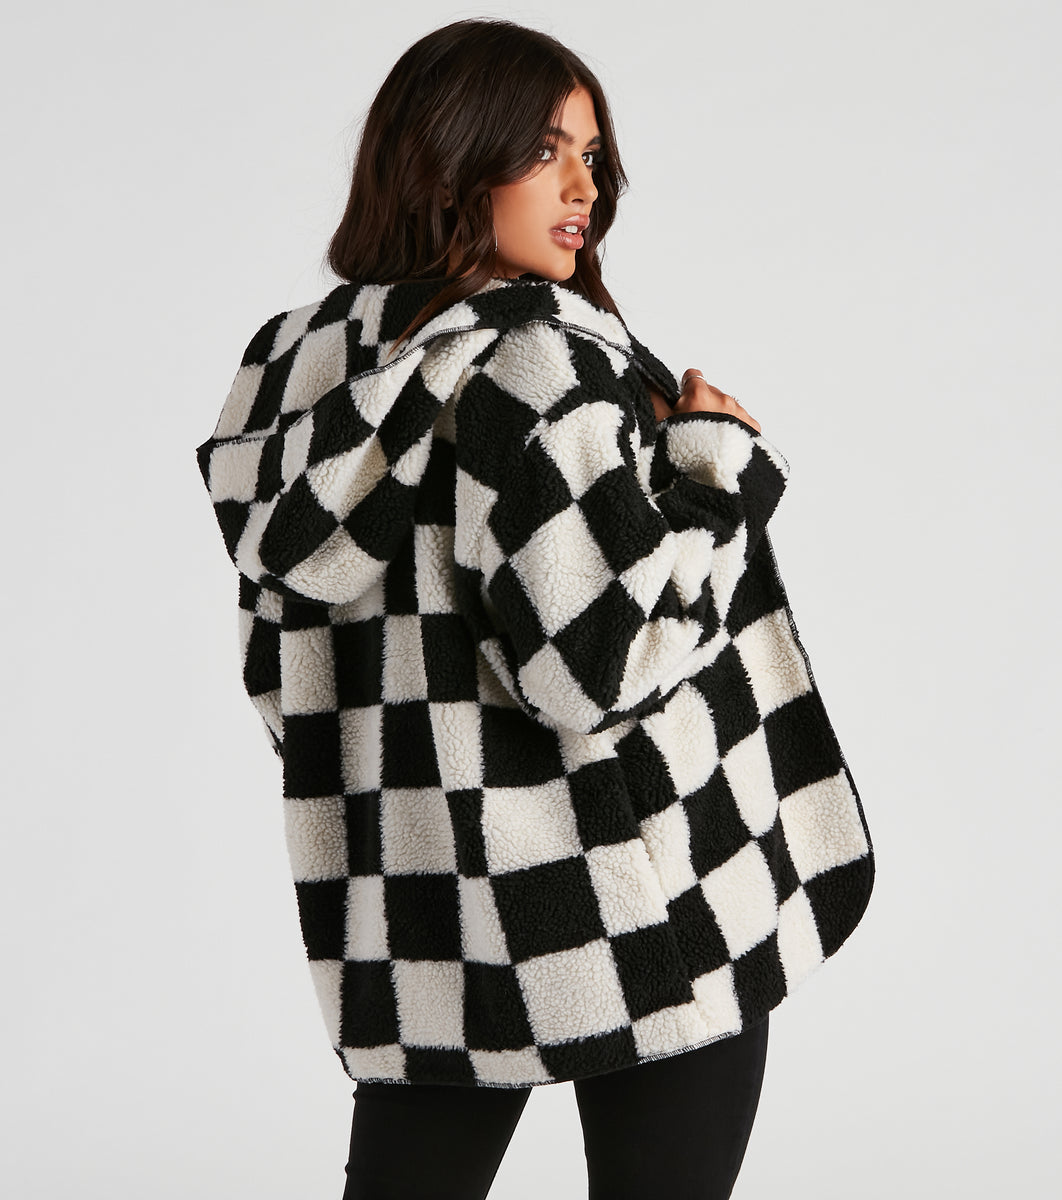 Cute Checkered Faux Sherpa Jacket